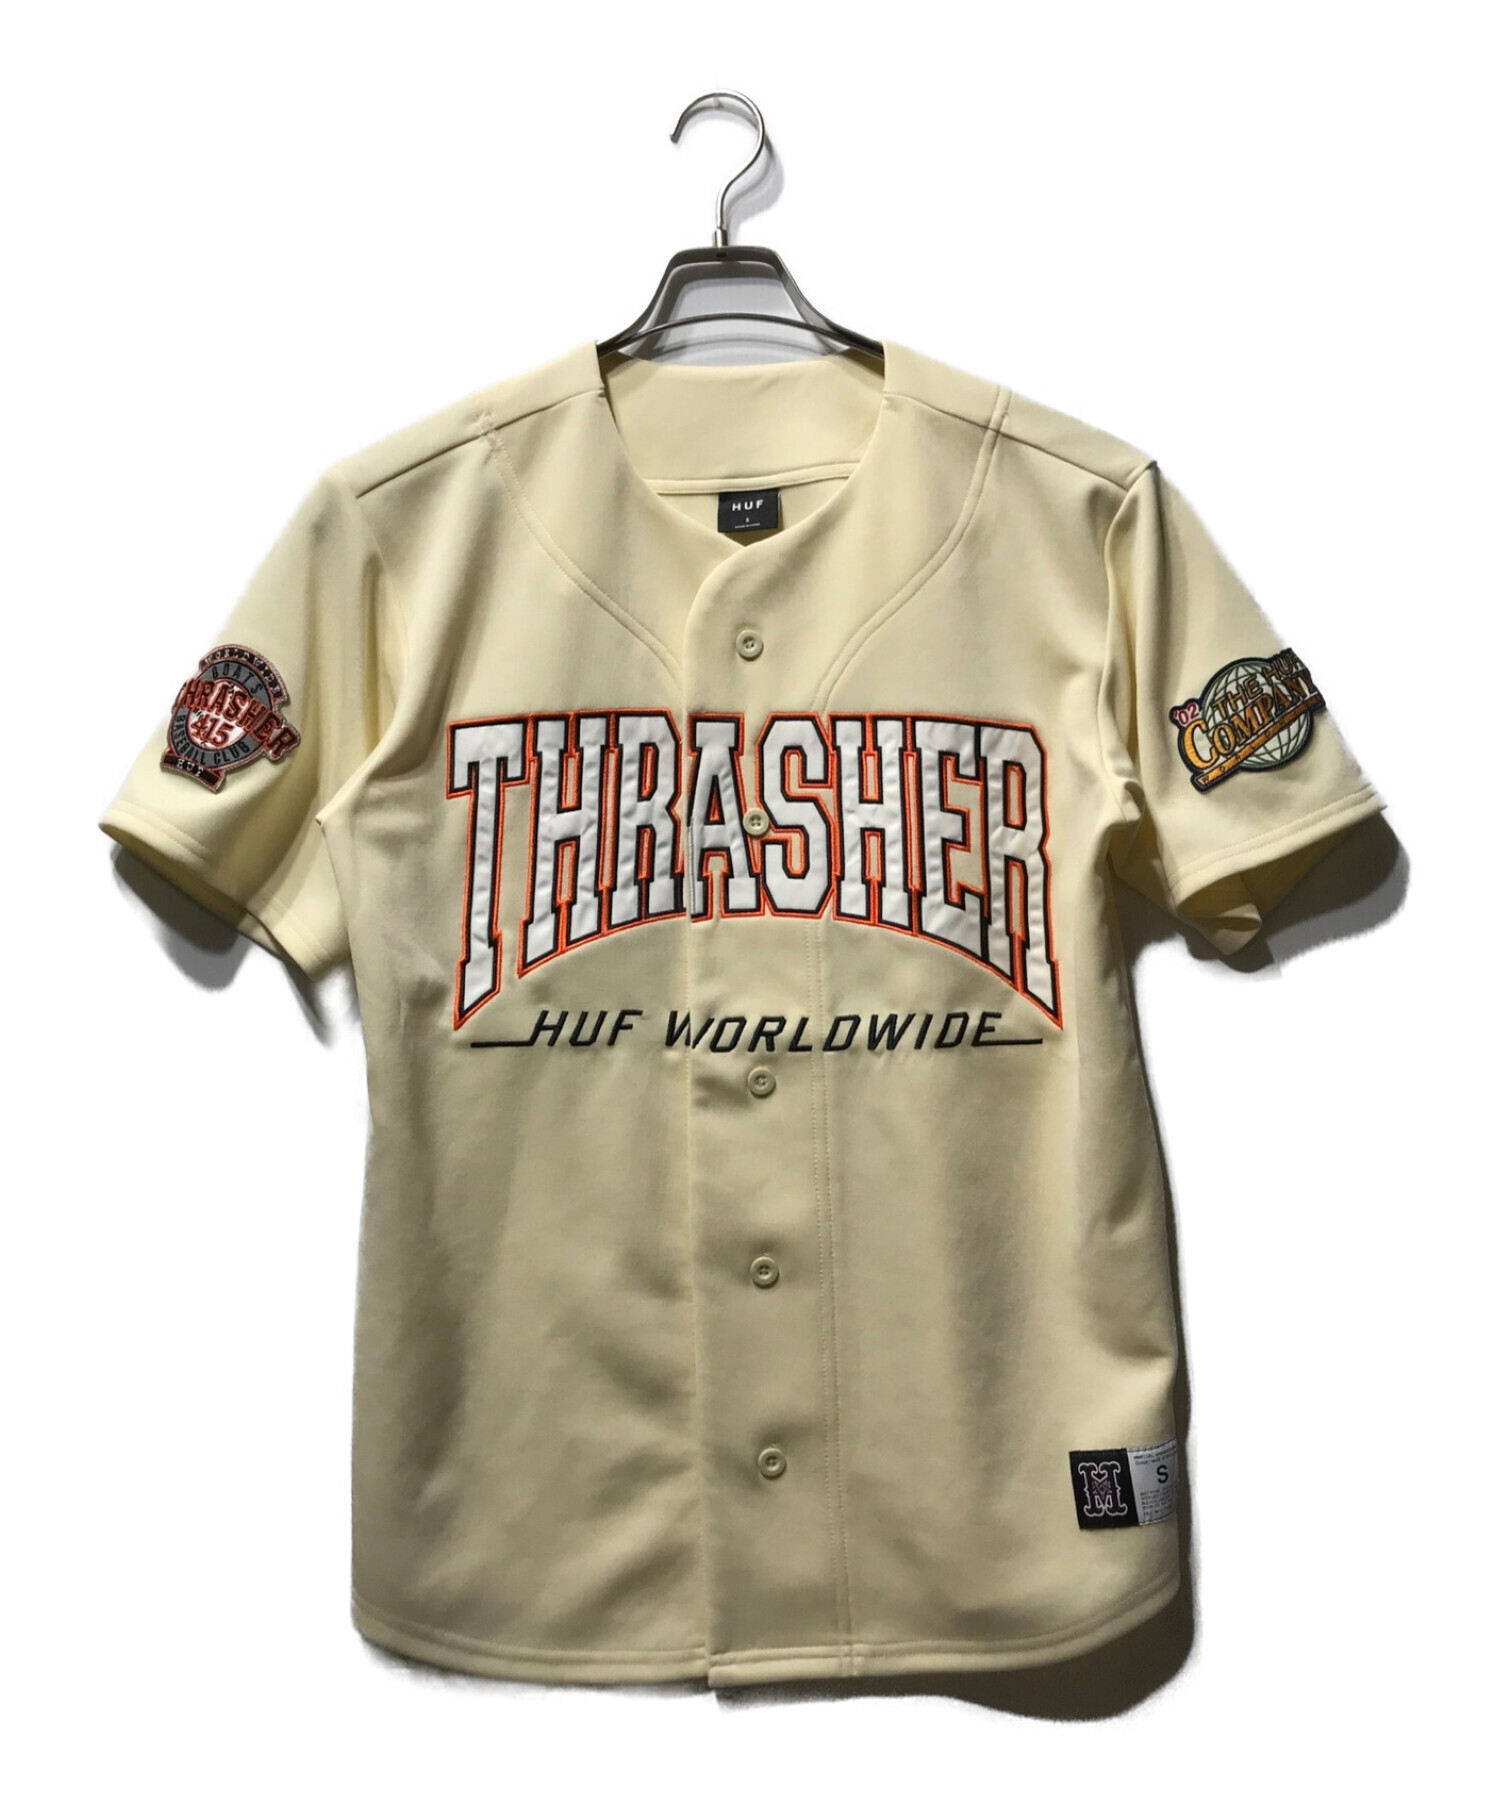 HUF (ハフ) THRASHER (スラッシャー) ベースボールシャツ アイボリー サイズ:S